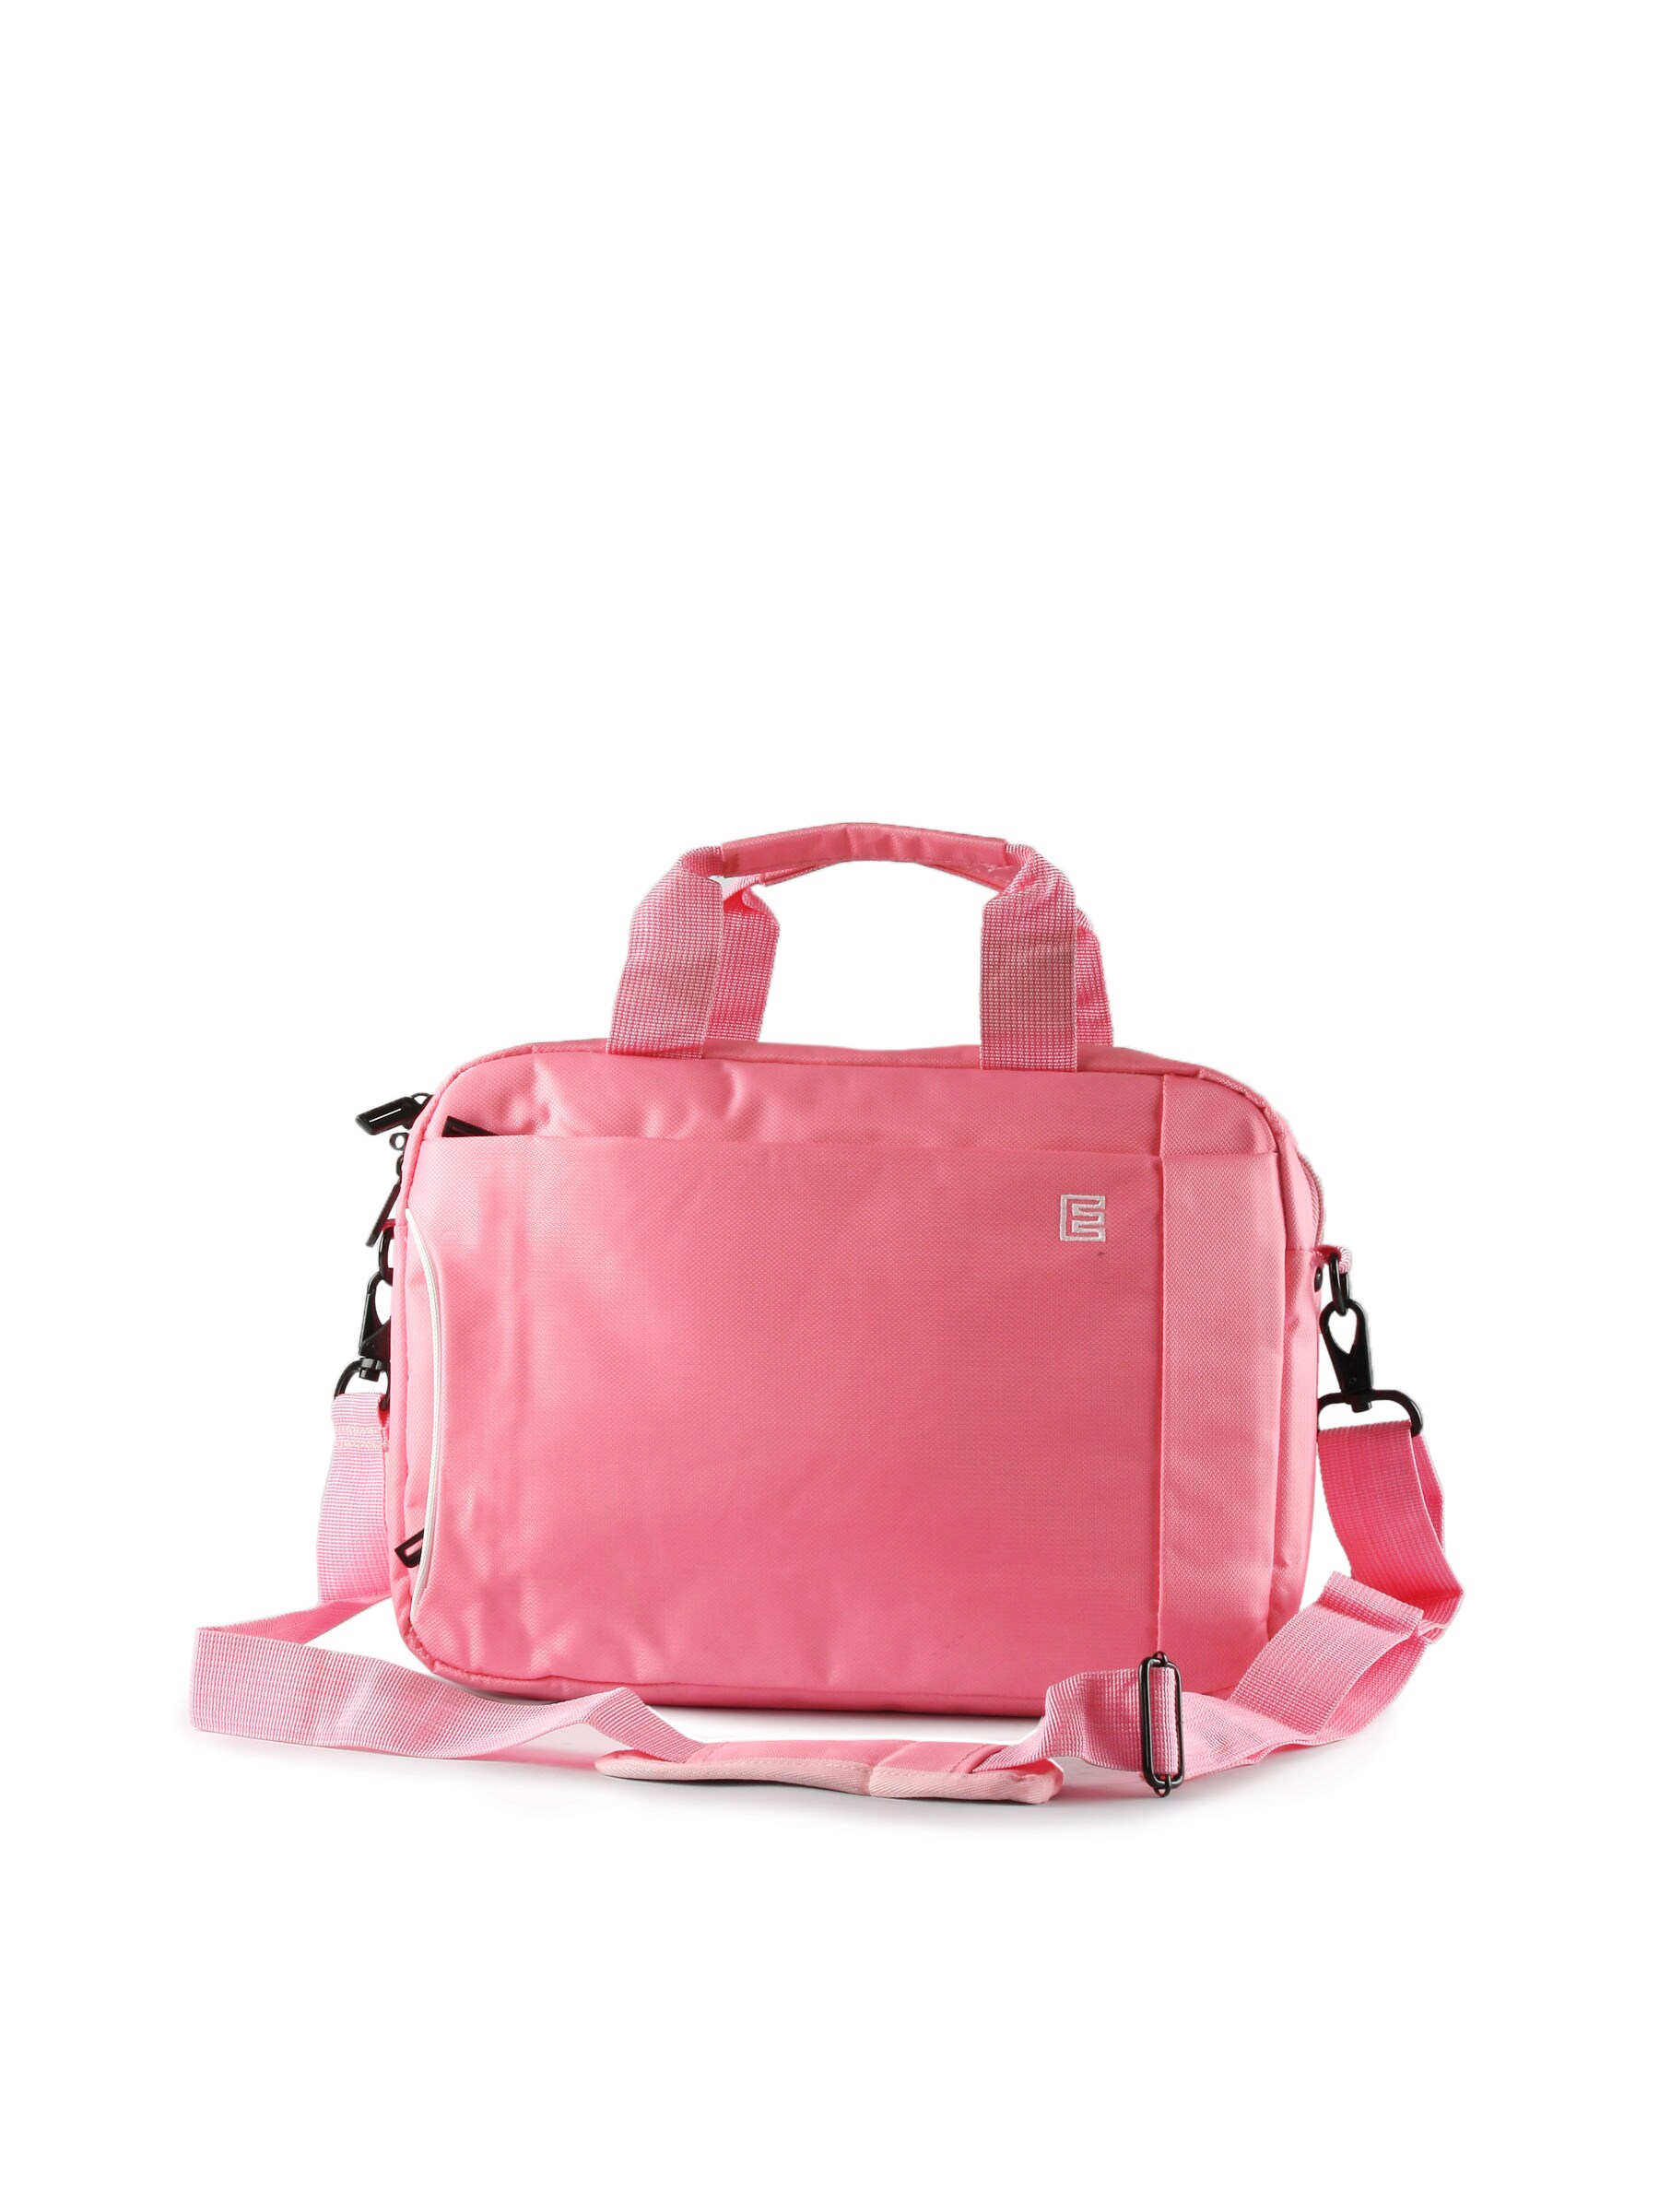 Kiara Women Fluroscent Pink Handbag